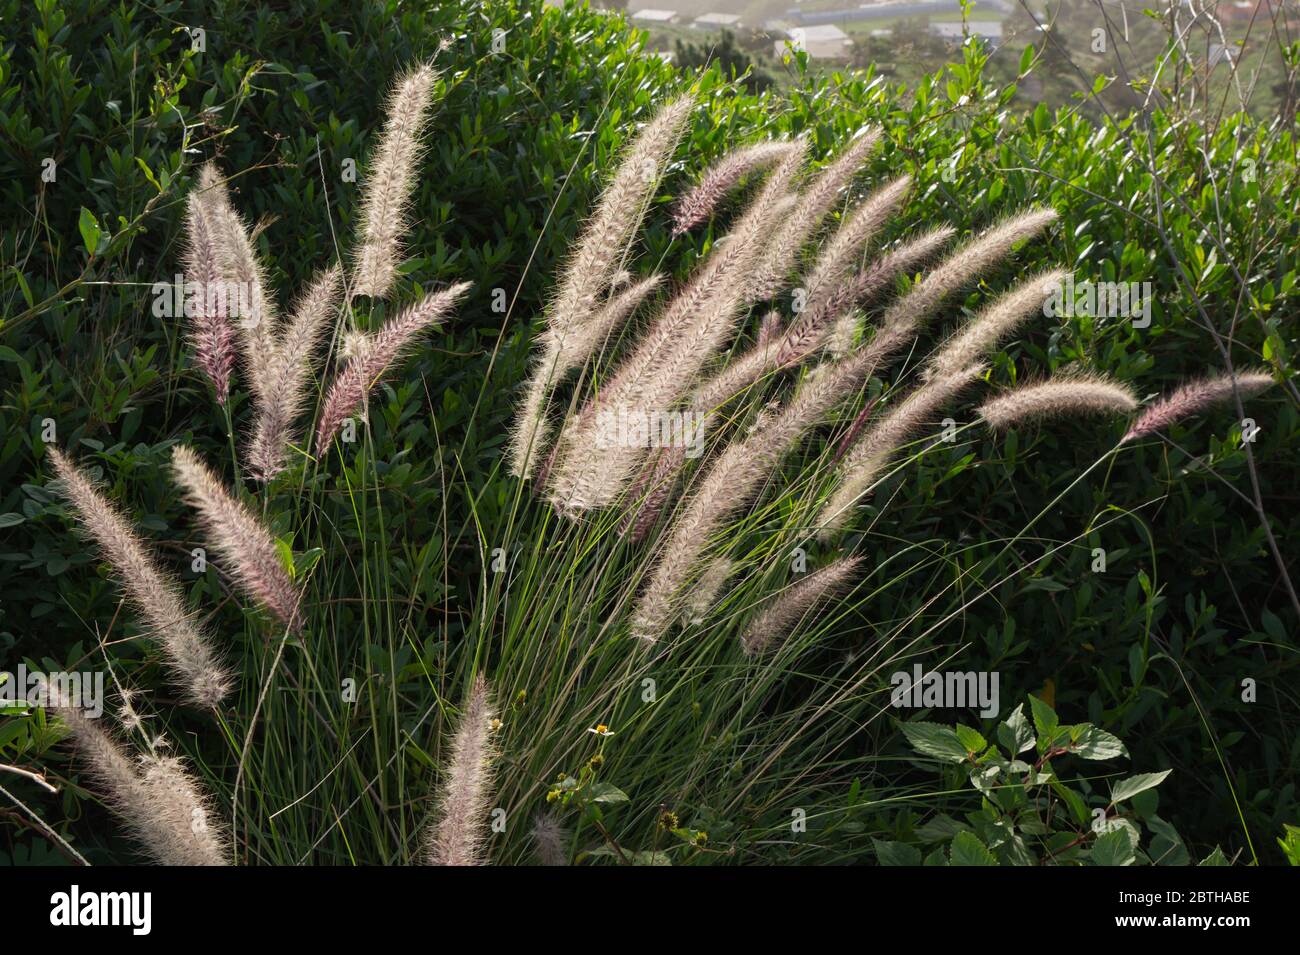 Invasive plant known as Cat's Tail or El Rabo de Gato (Pennisetum setaceum) in La Palma, Canary Islands Stock Photo